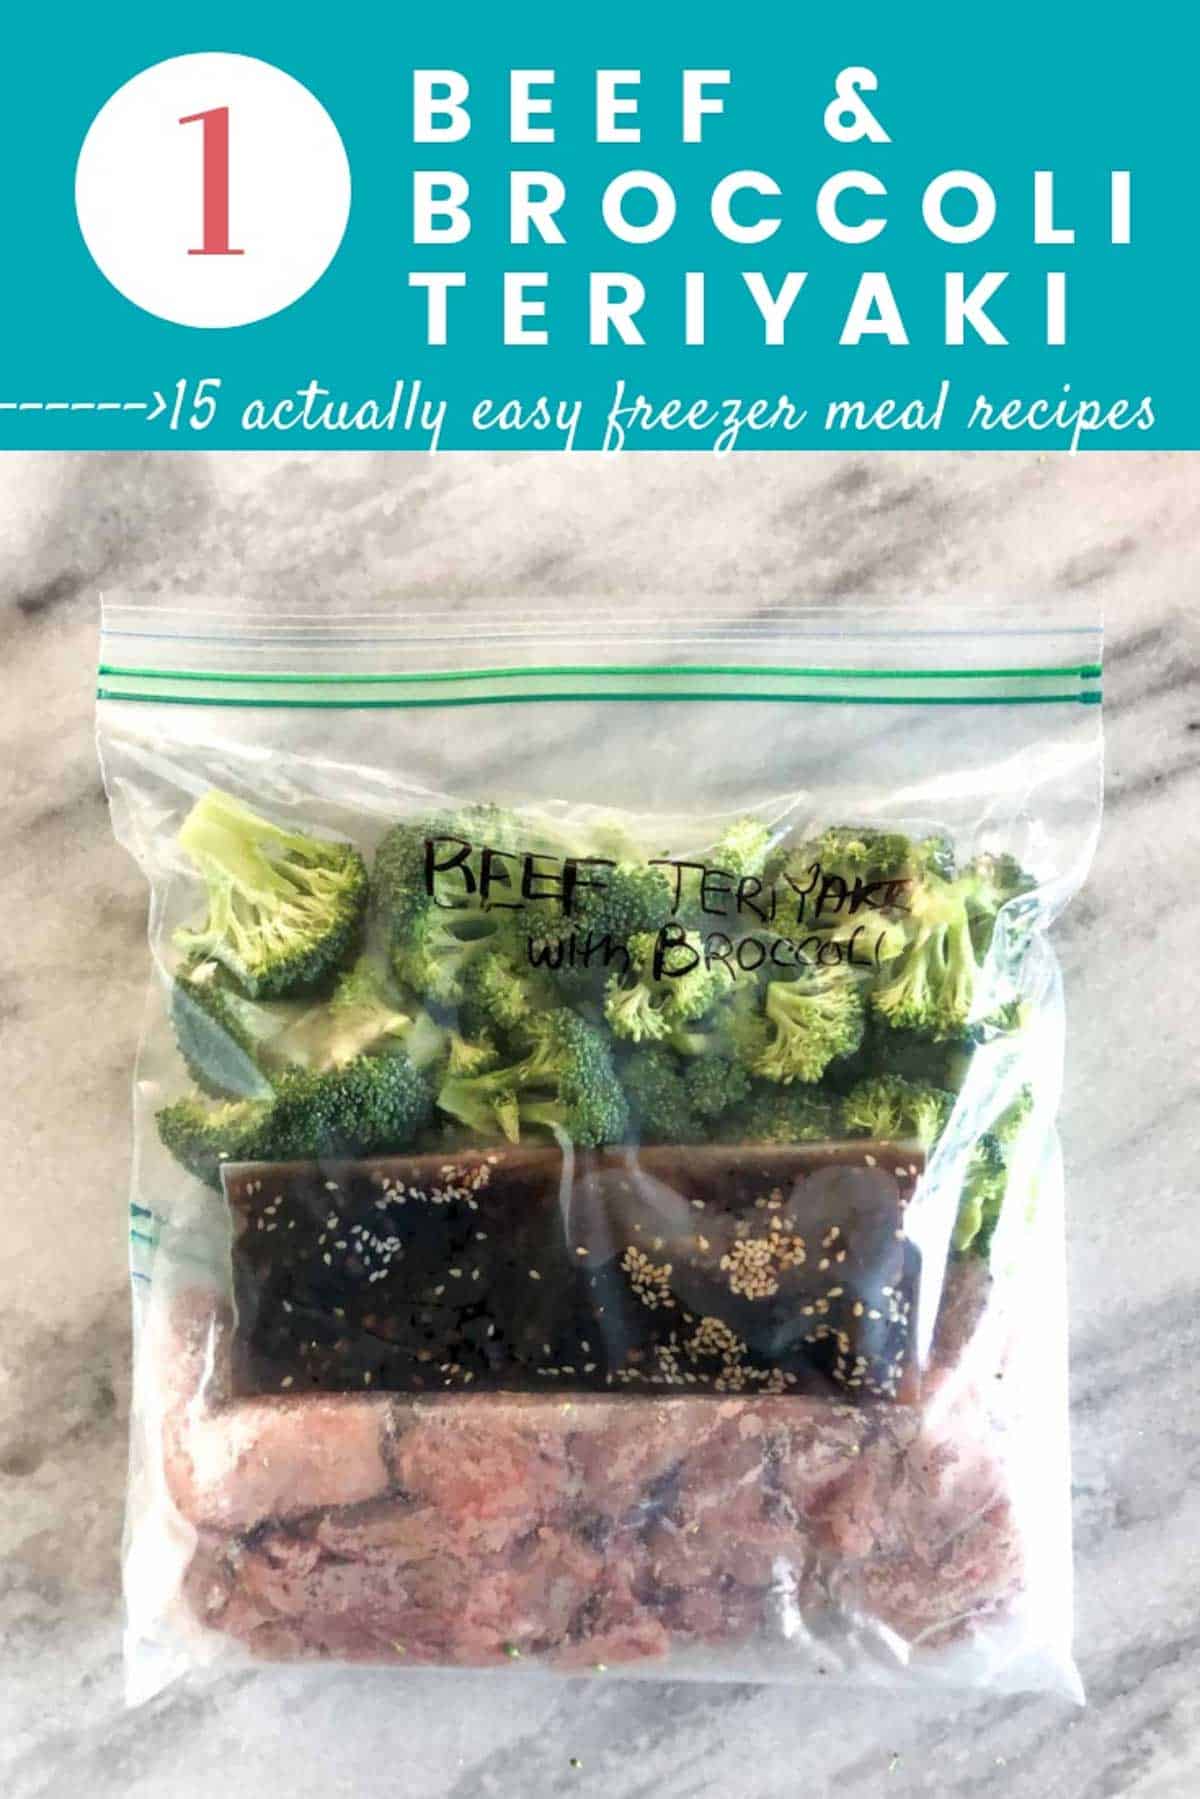 Easy Freezer Meals: Beef & Broccoli Teriyaki freezer meal in a bag. 